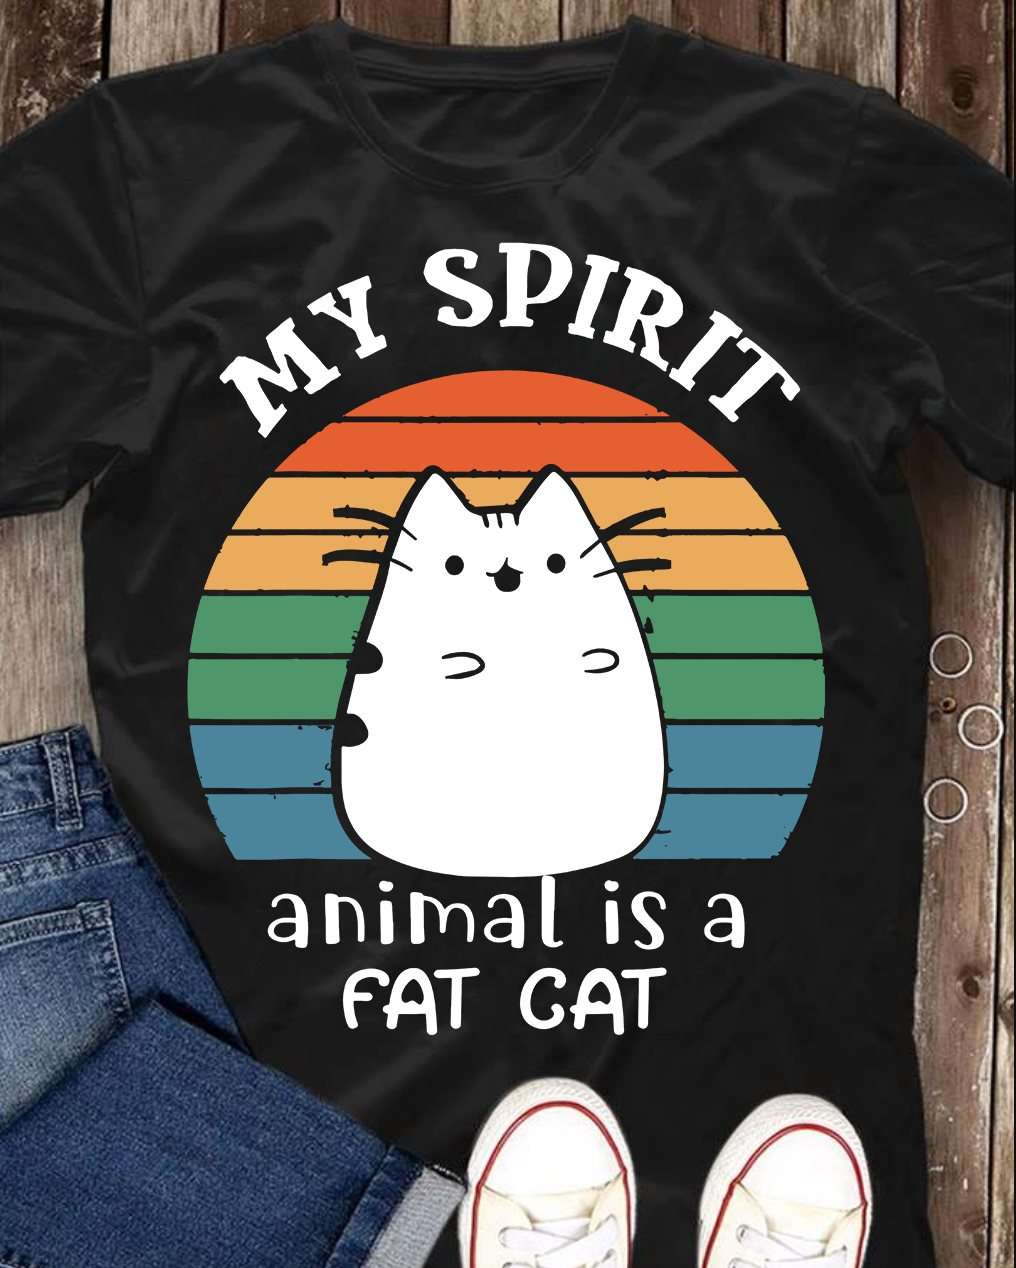 Little Cat, Fat Cat - My spirit animal is a fat cat